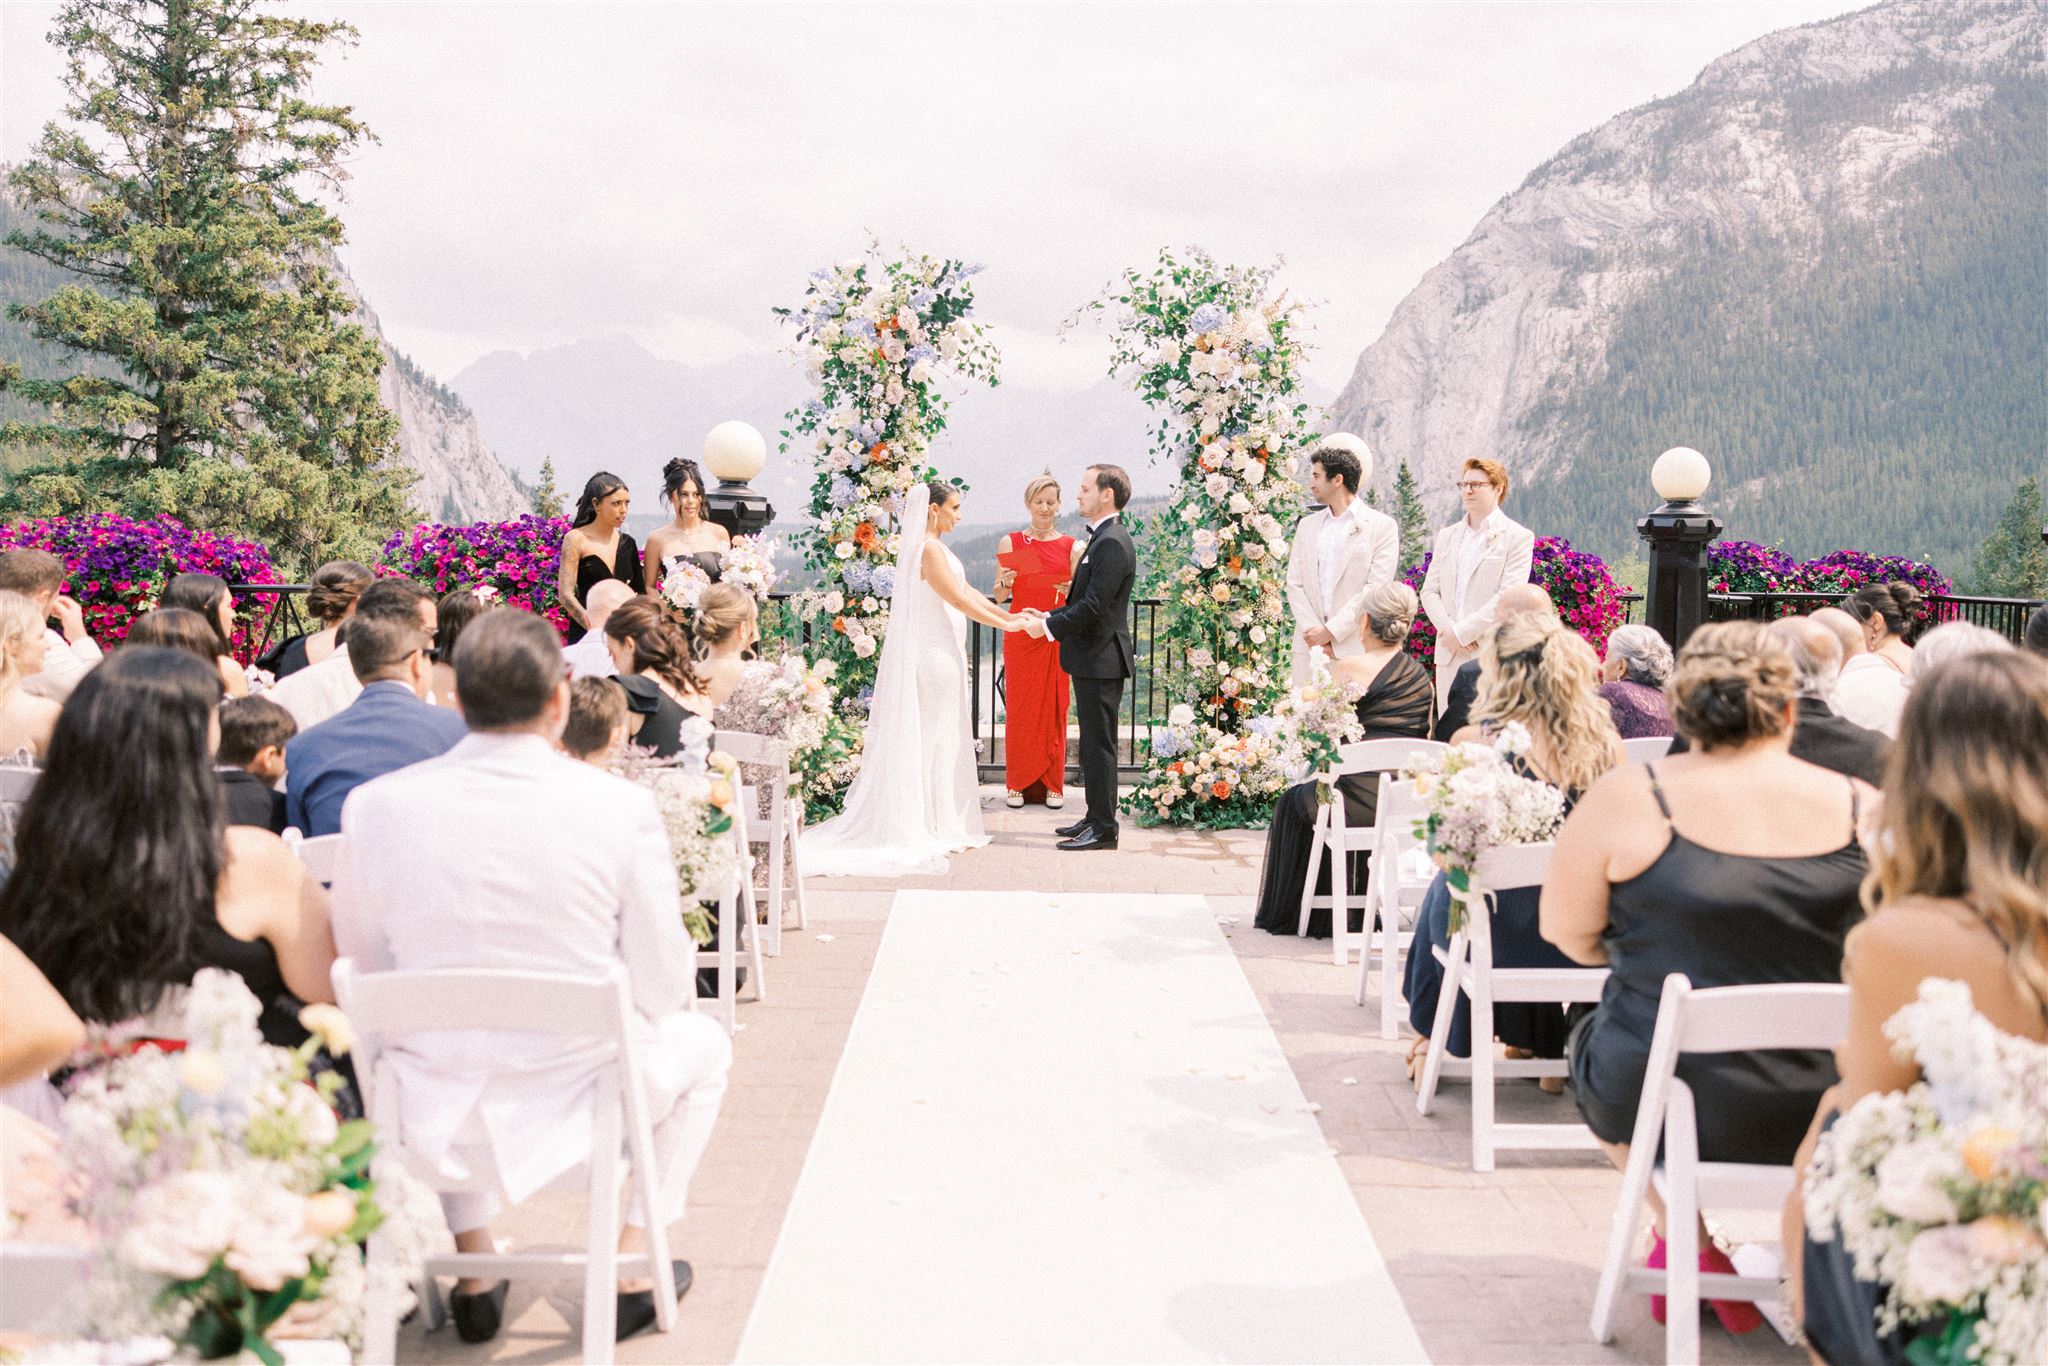 Vibrant Banff Springs Wedding Nicole Sarah, banff springs terrace wedding, terrace fairmont wedding ceremony, floral arch